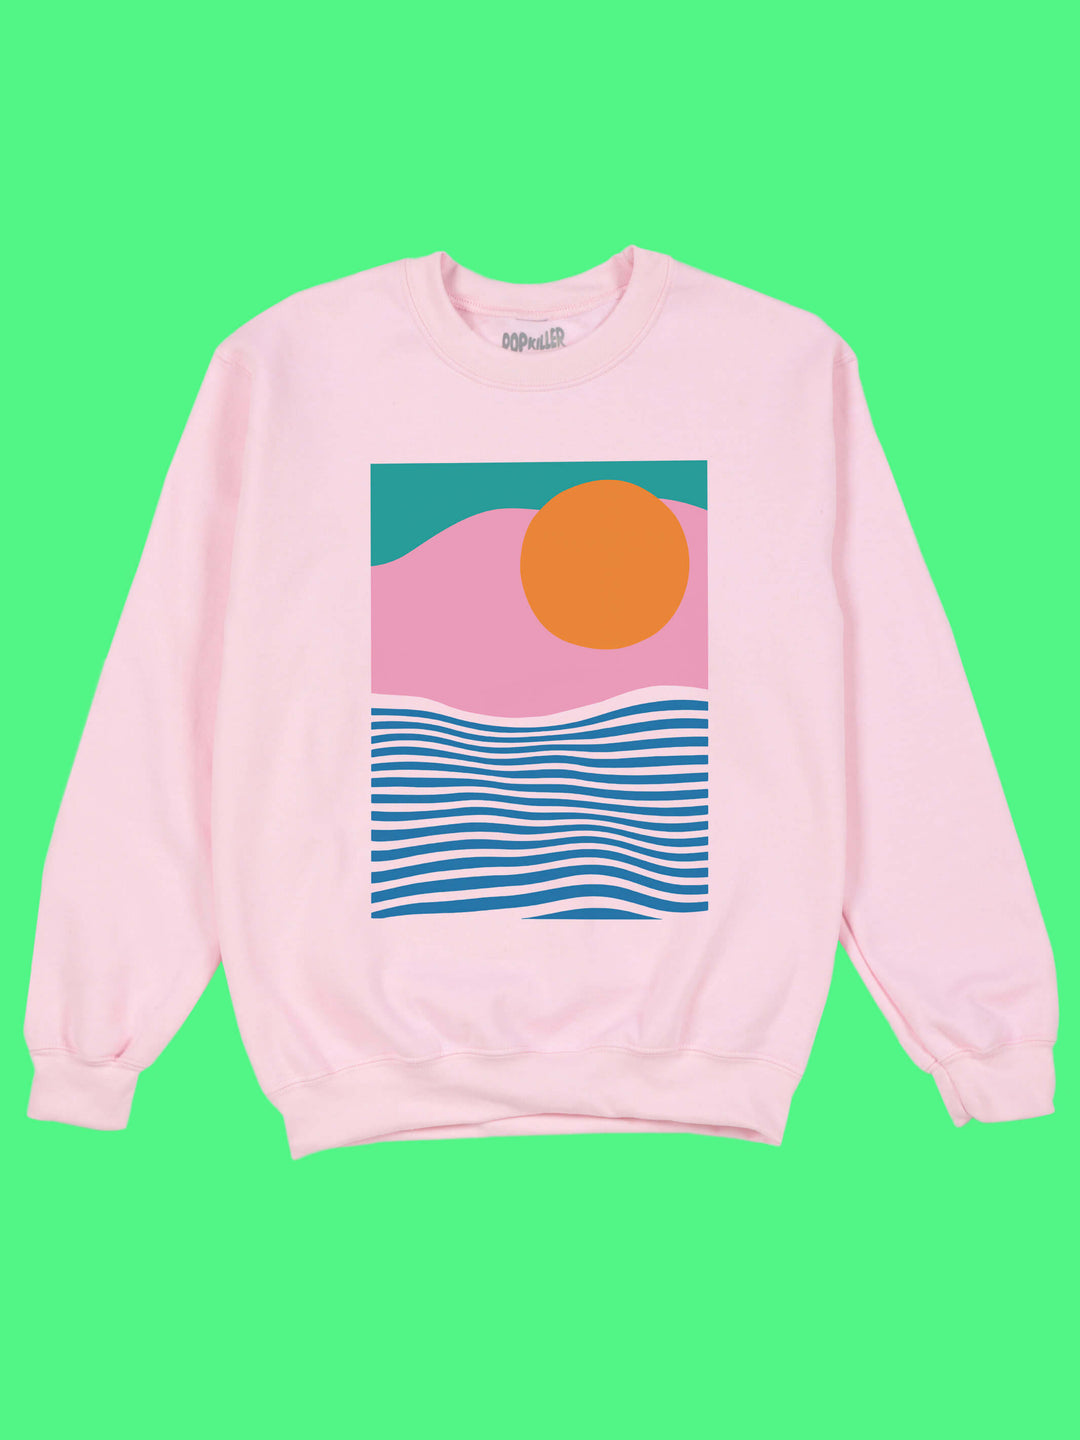 Vaporwave sunset pink sweater.